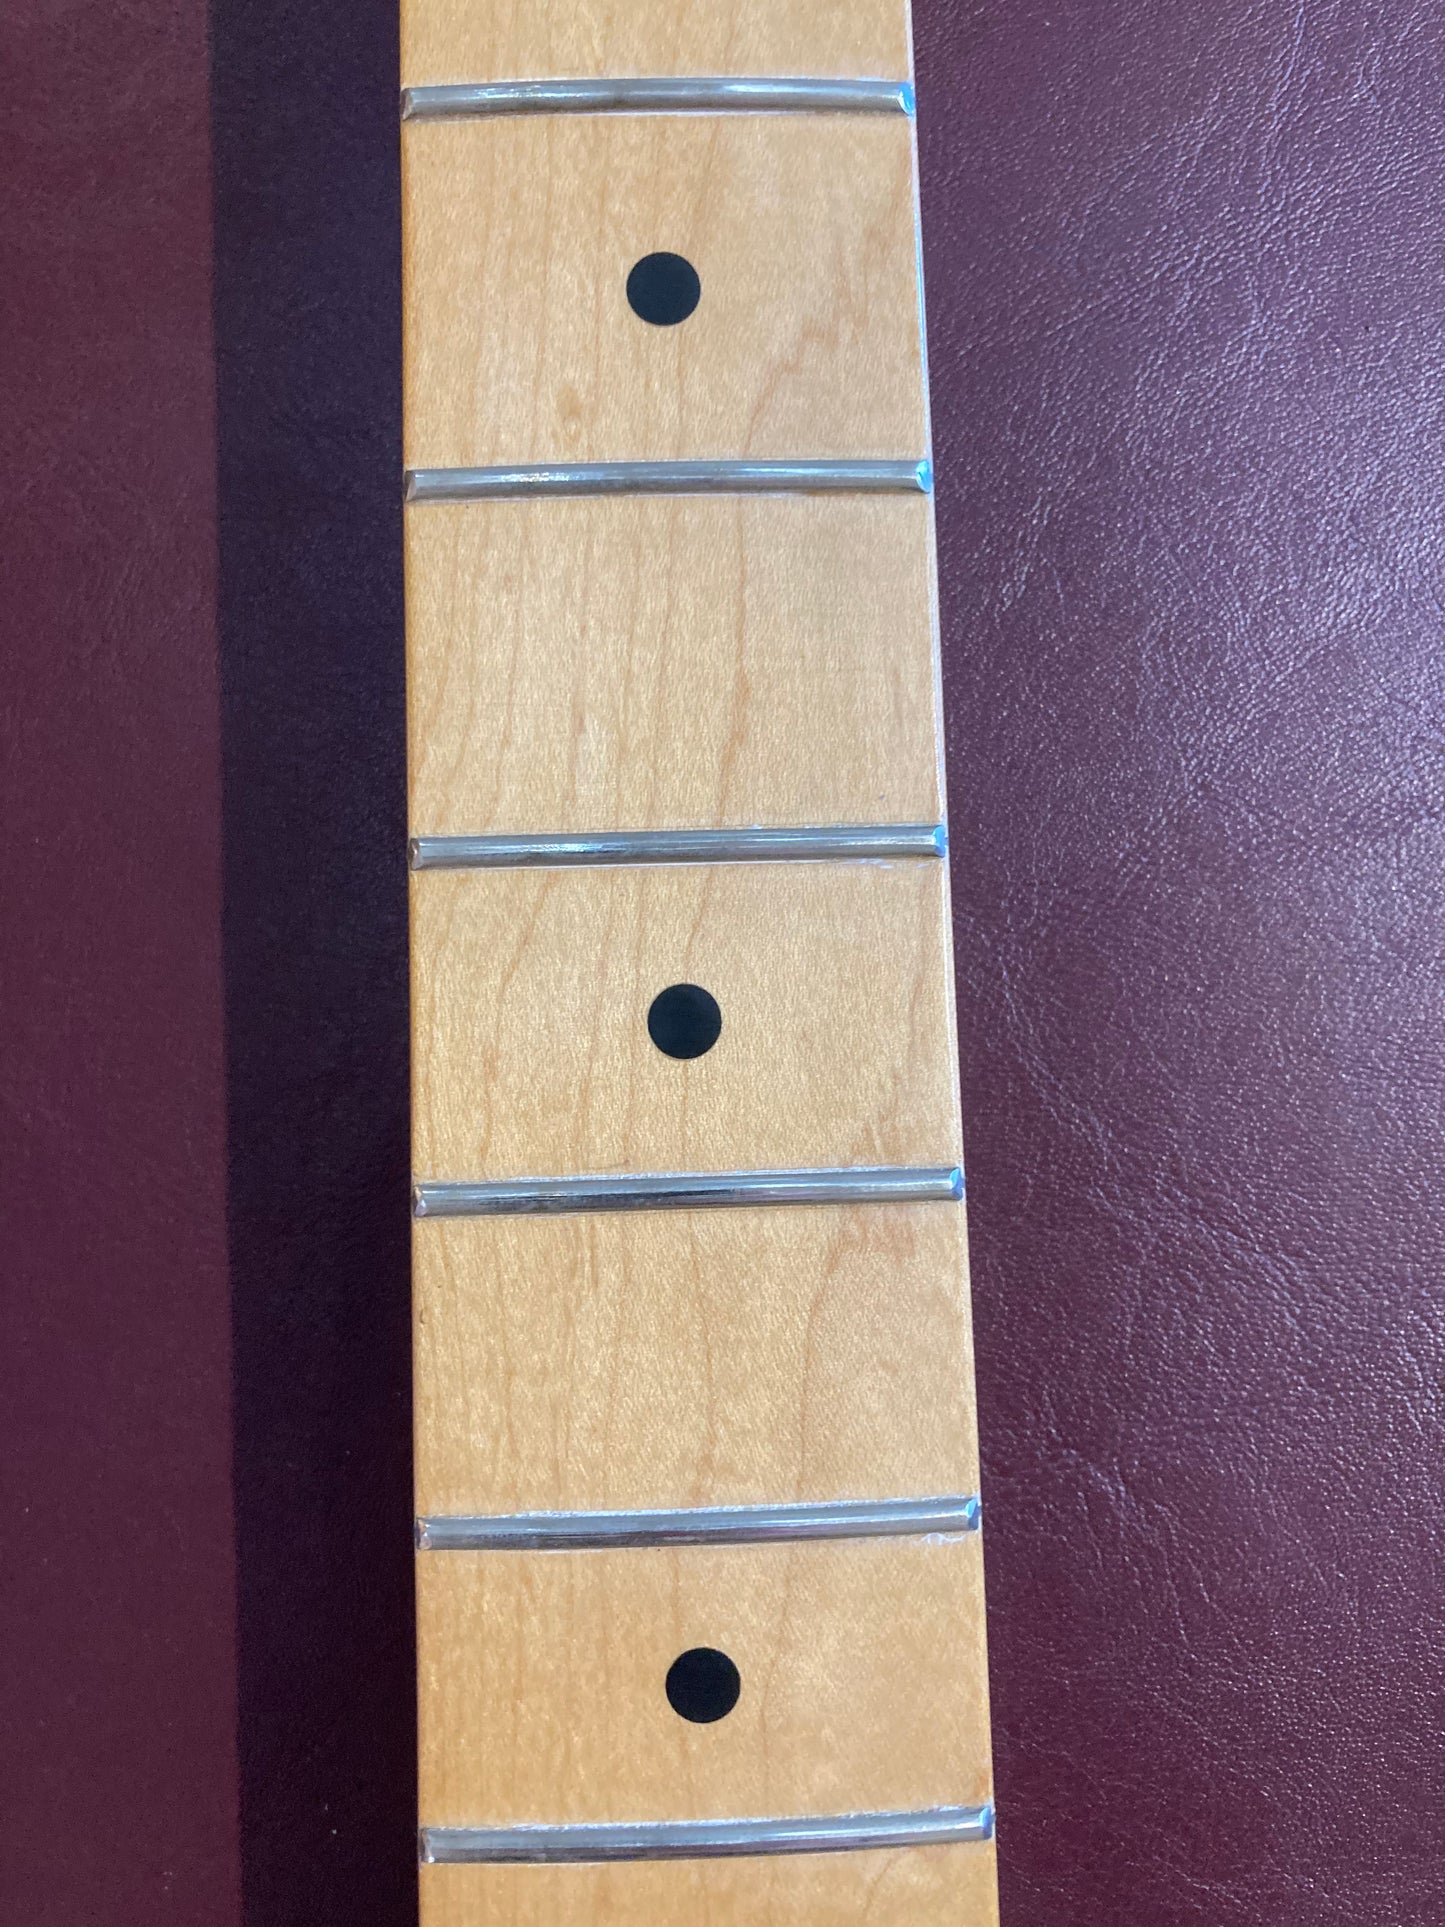 Fender MIM Stratocaster Neck (Used)